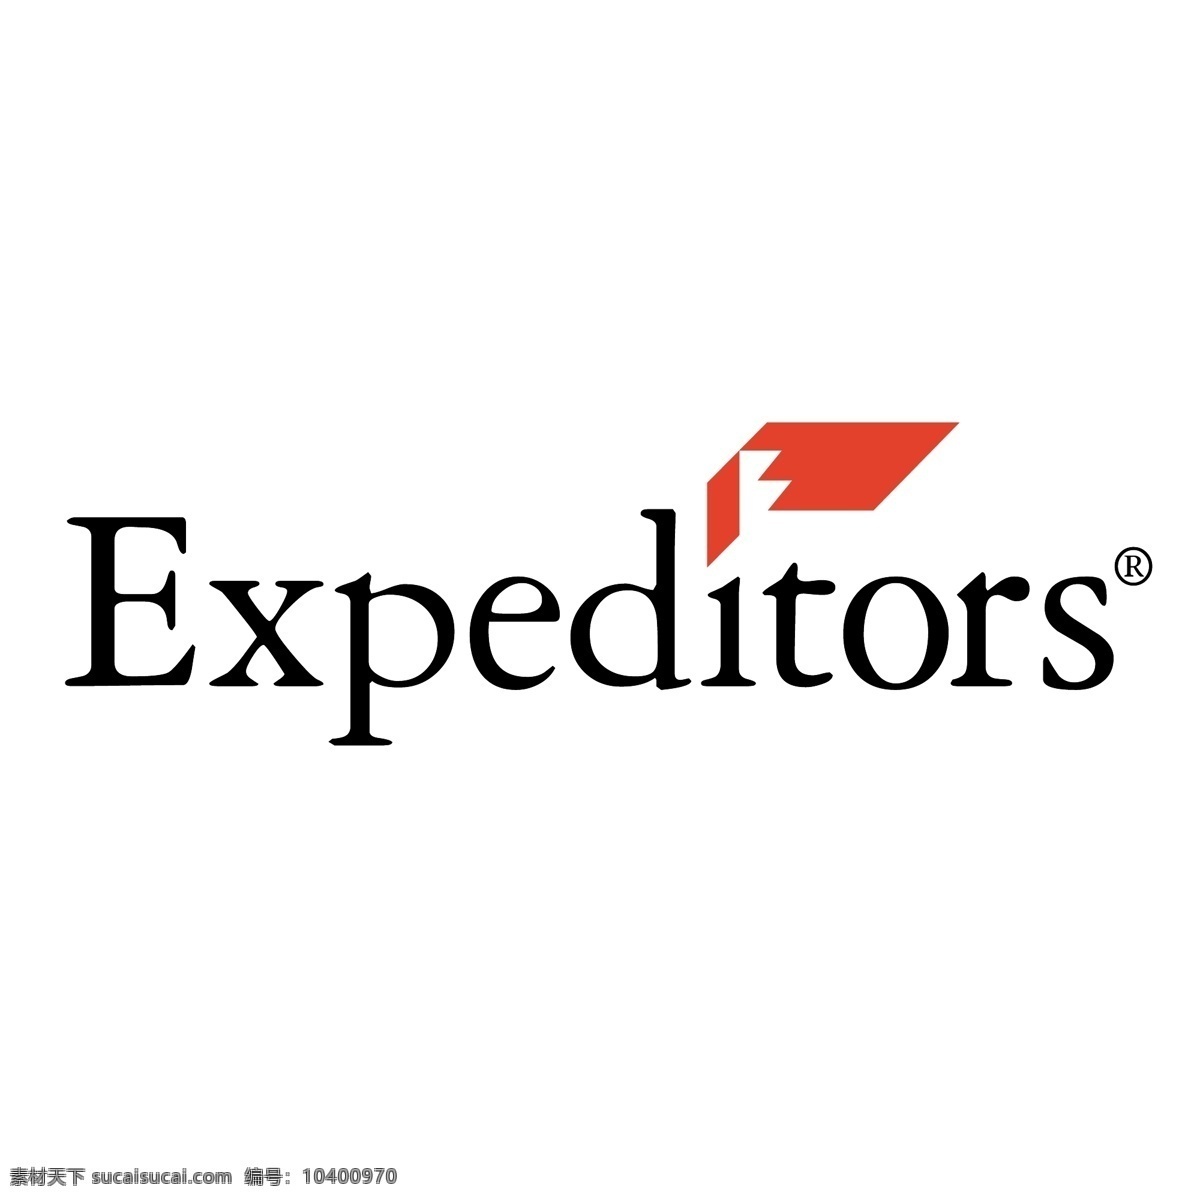 迅捷 免费 expeditors 标志 标识 白色